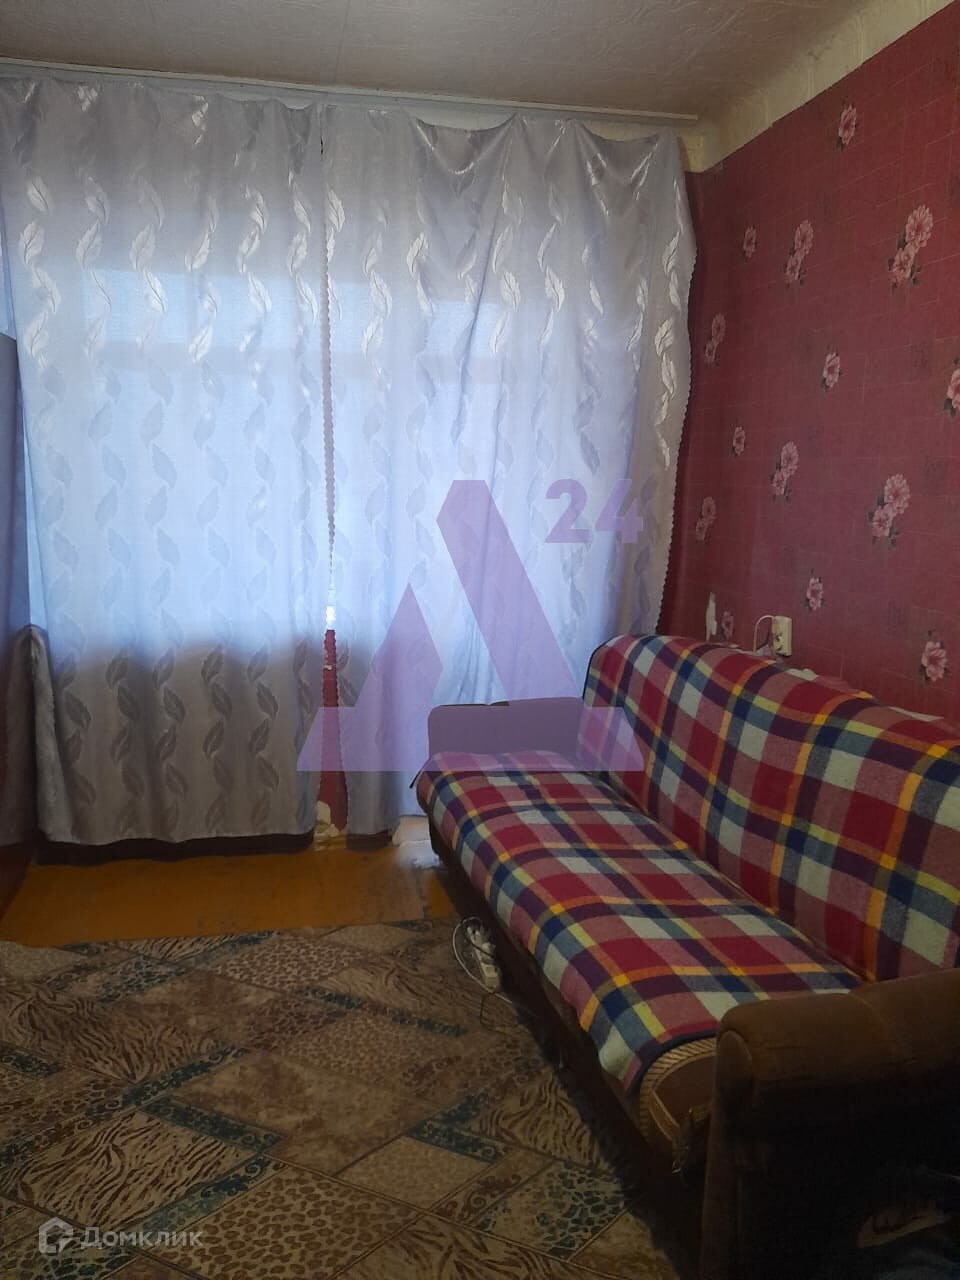 Сниму 1 комнатную квартиру в городе рубцовске на авито с фото посуточно